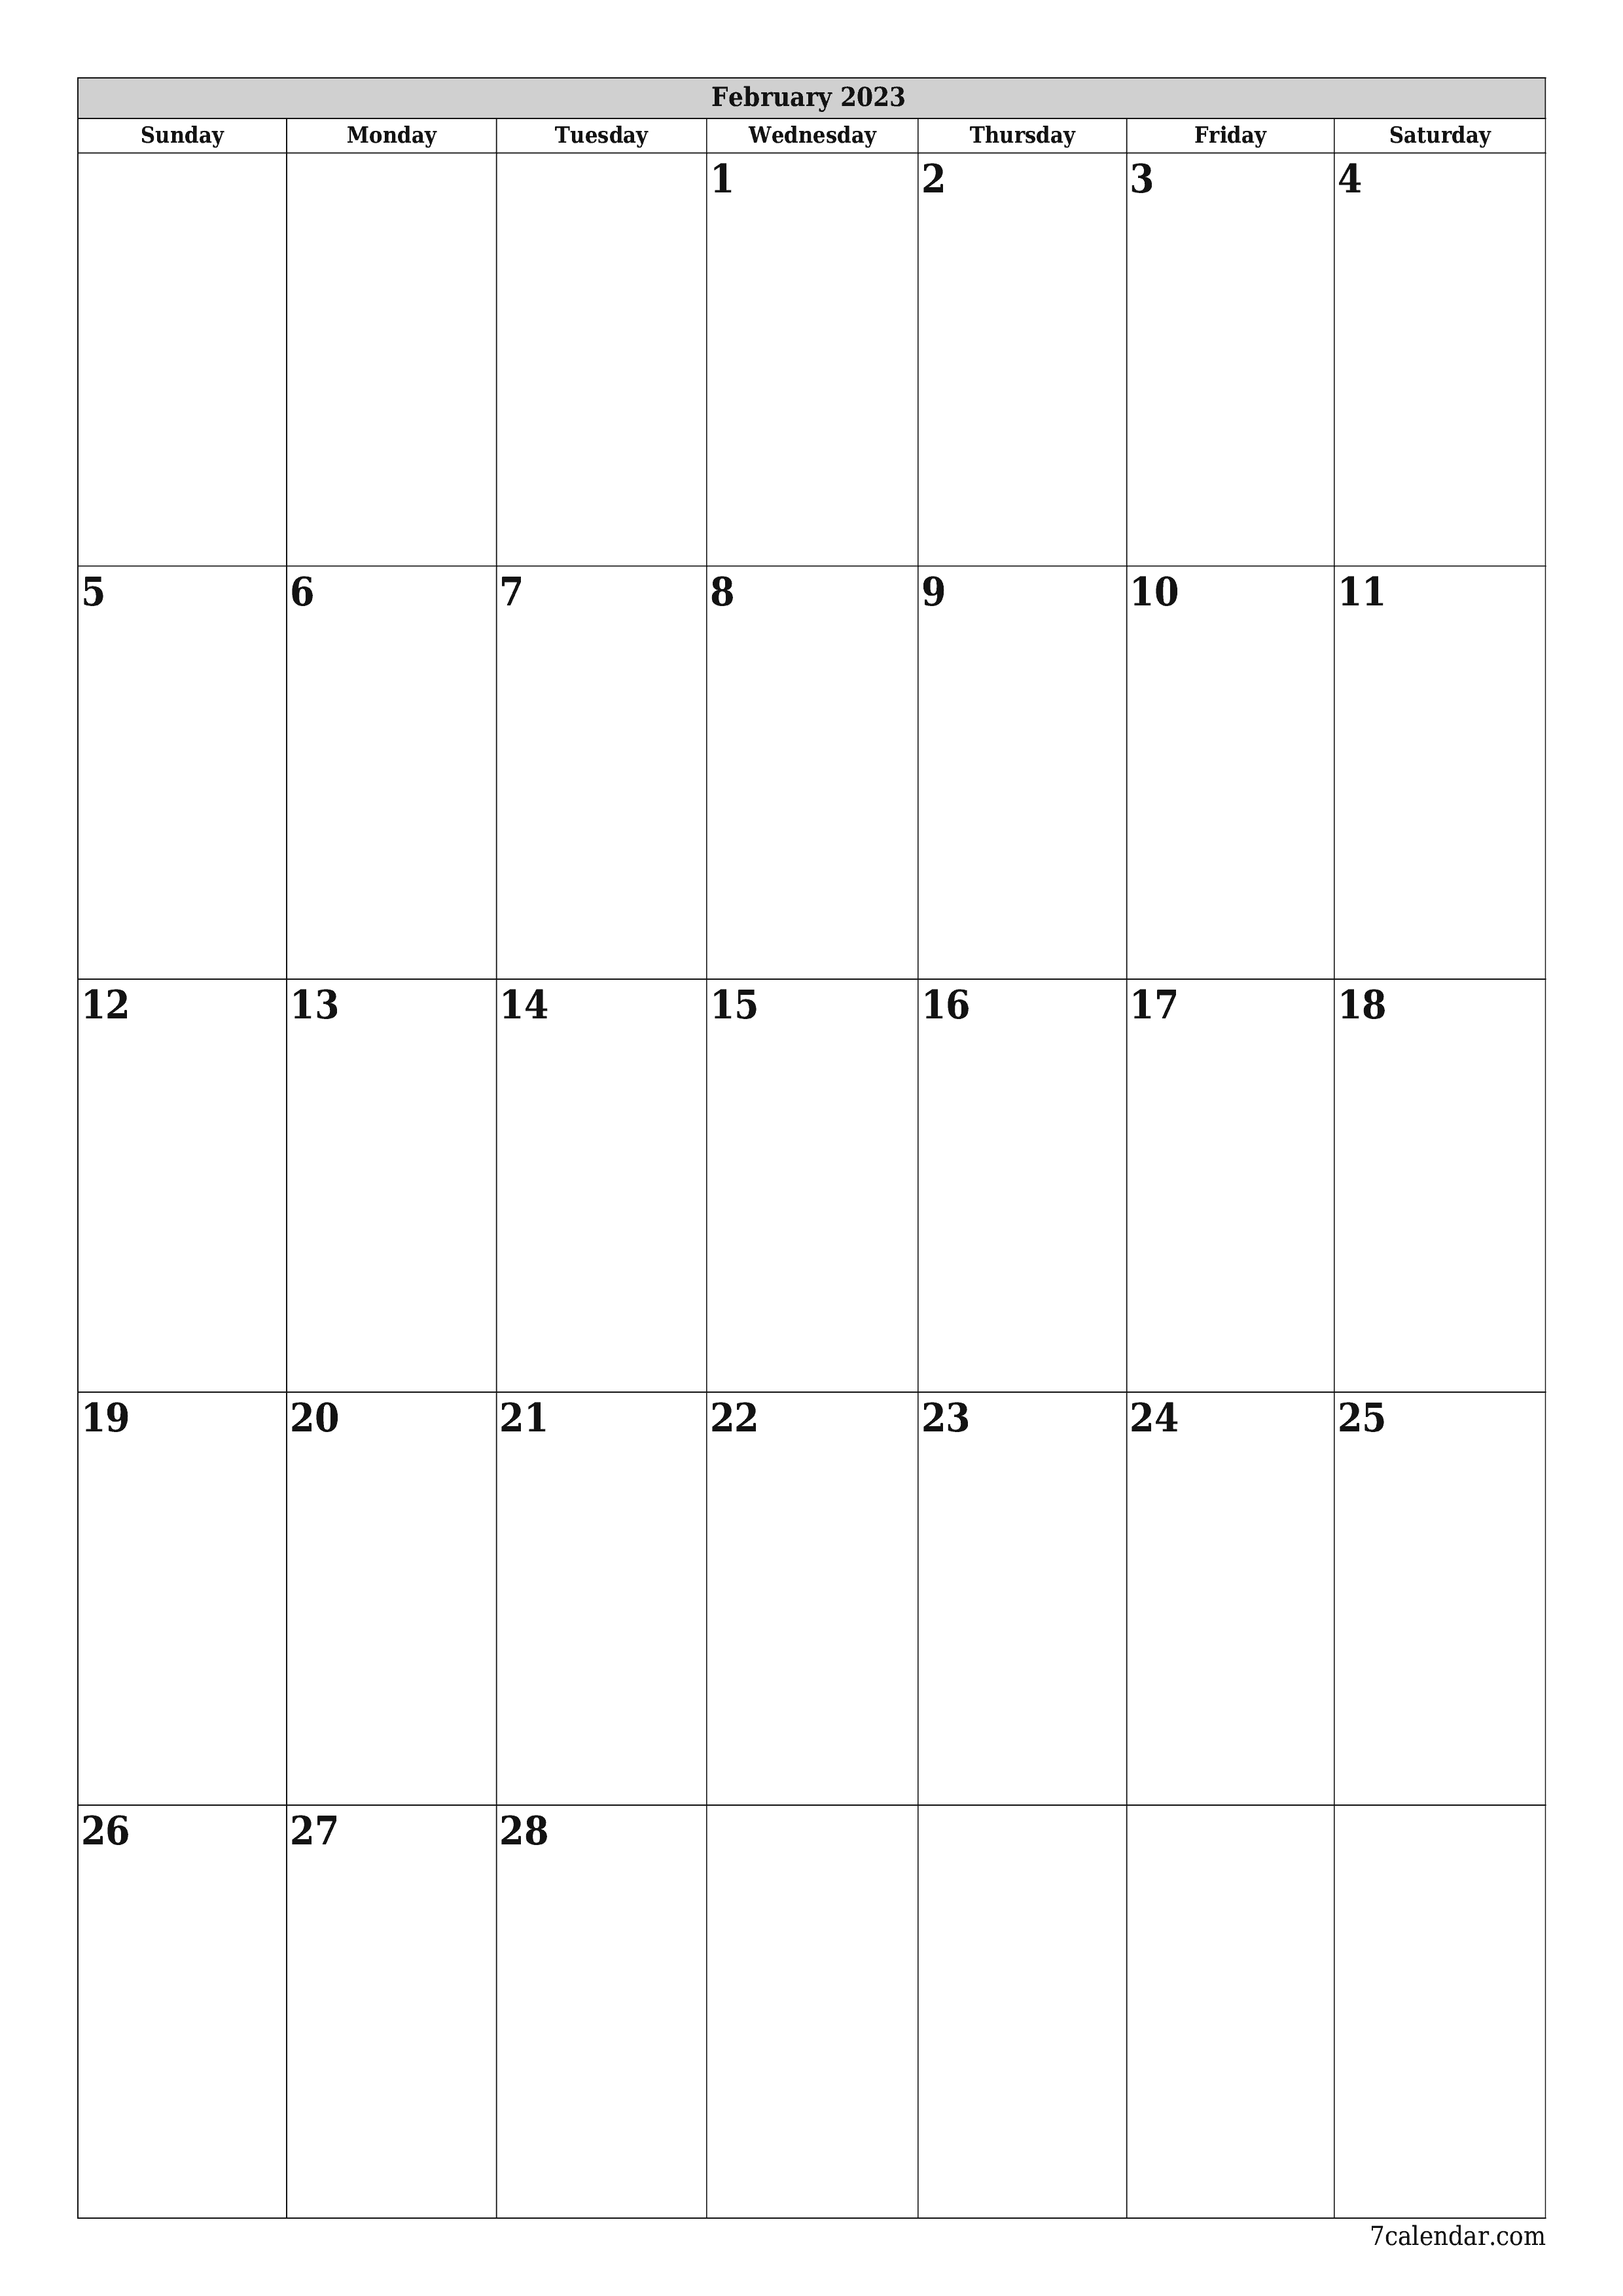 Blank calendar February 2023